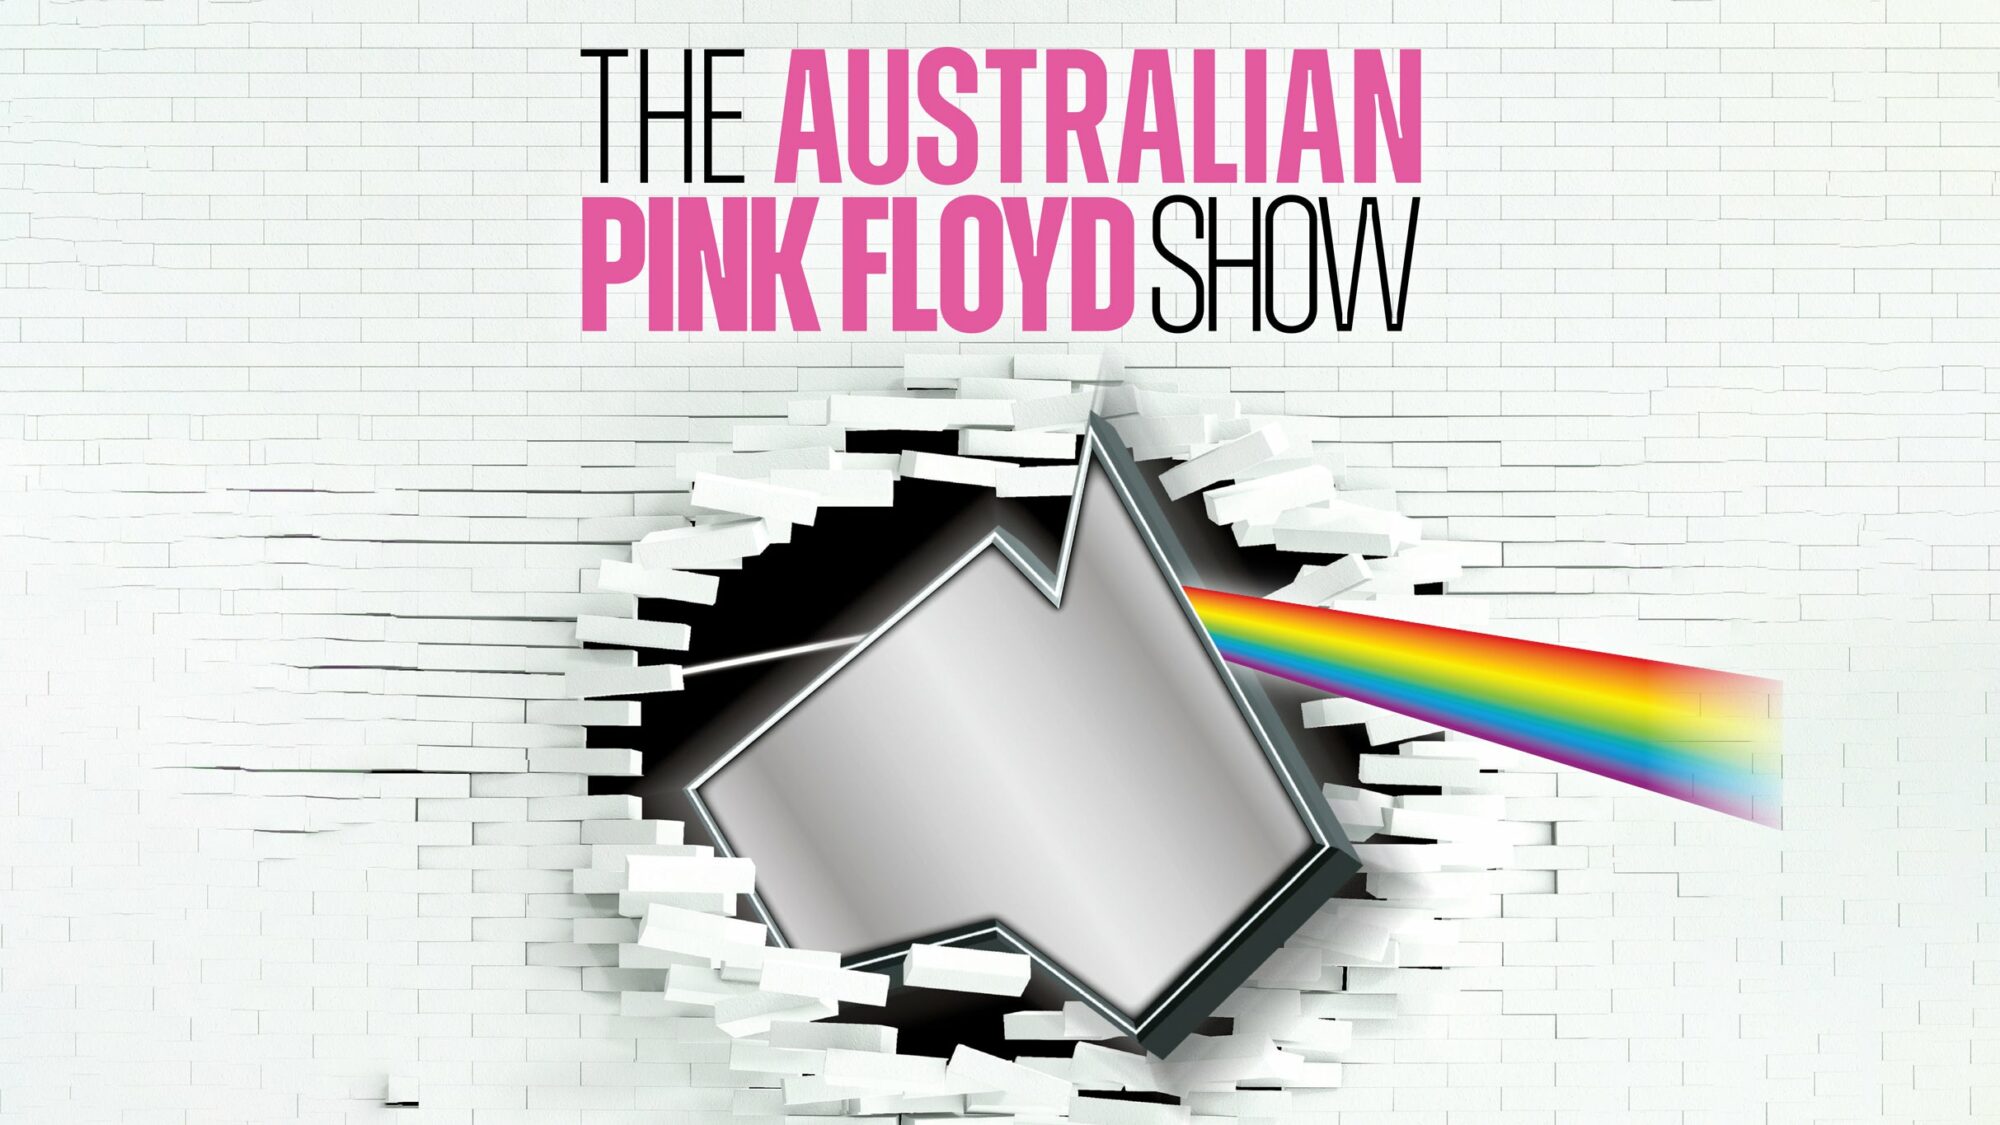 The Australian Pink Floyd at St Georges Hall, Bradford, Bradford